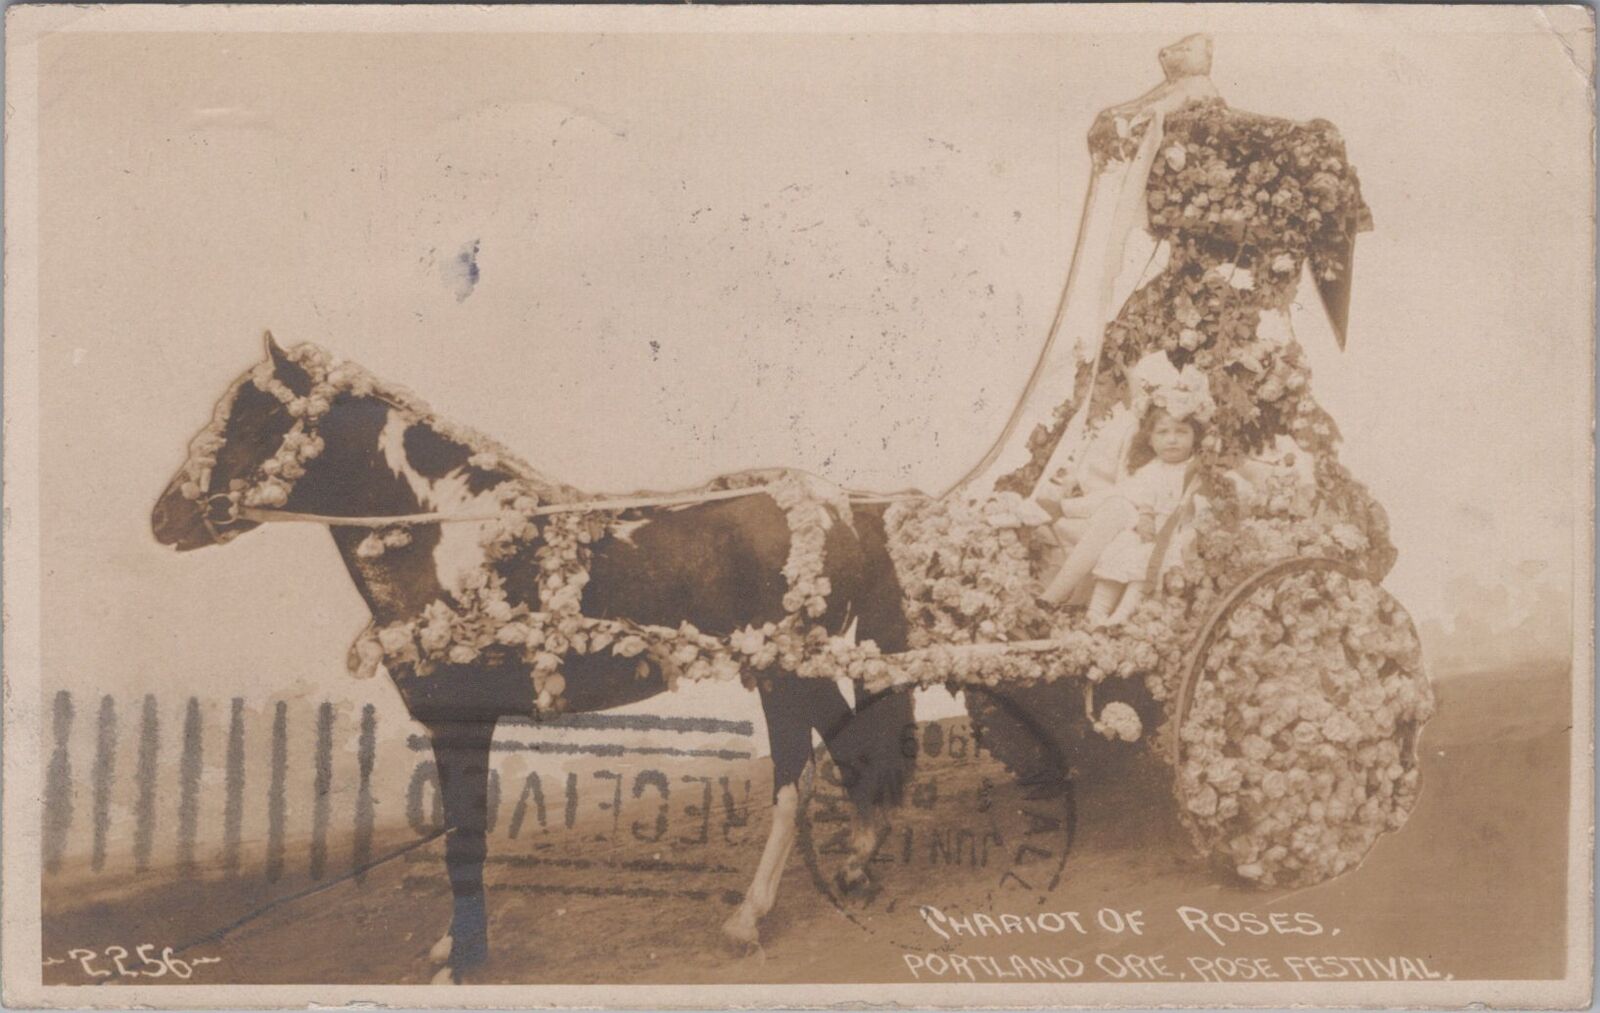 Chariot of Roses, Portland Oregon Rose Festival 1909 RPPC Photo Postcard